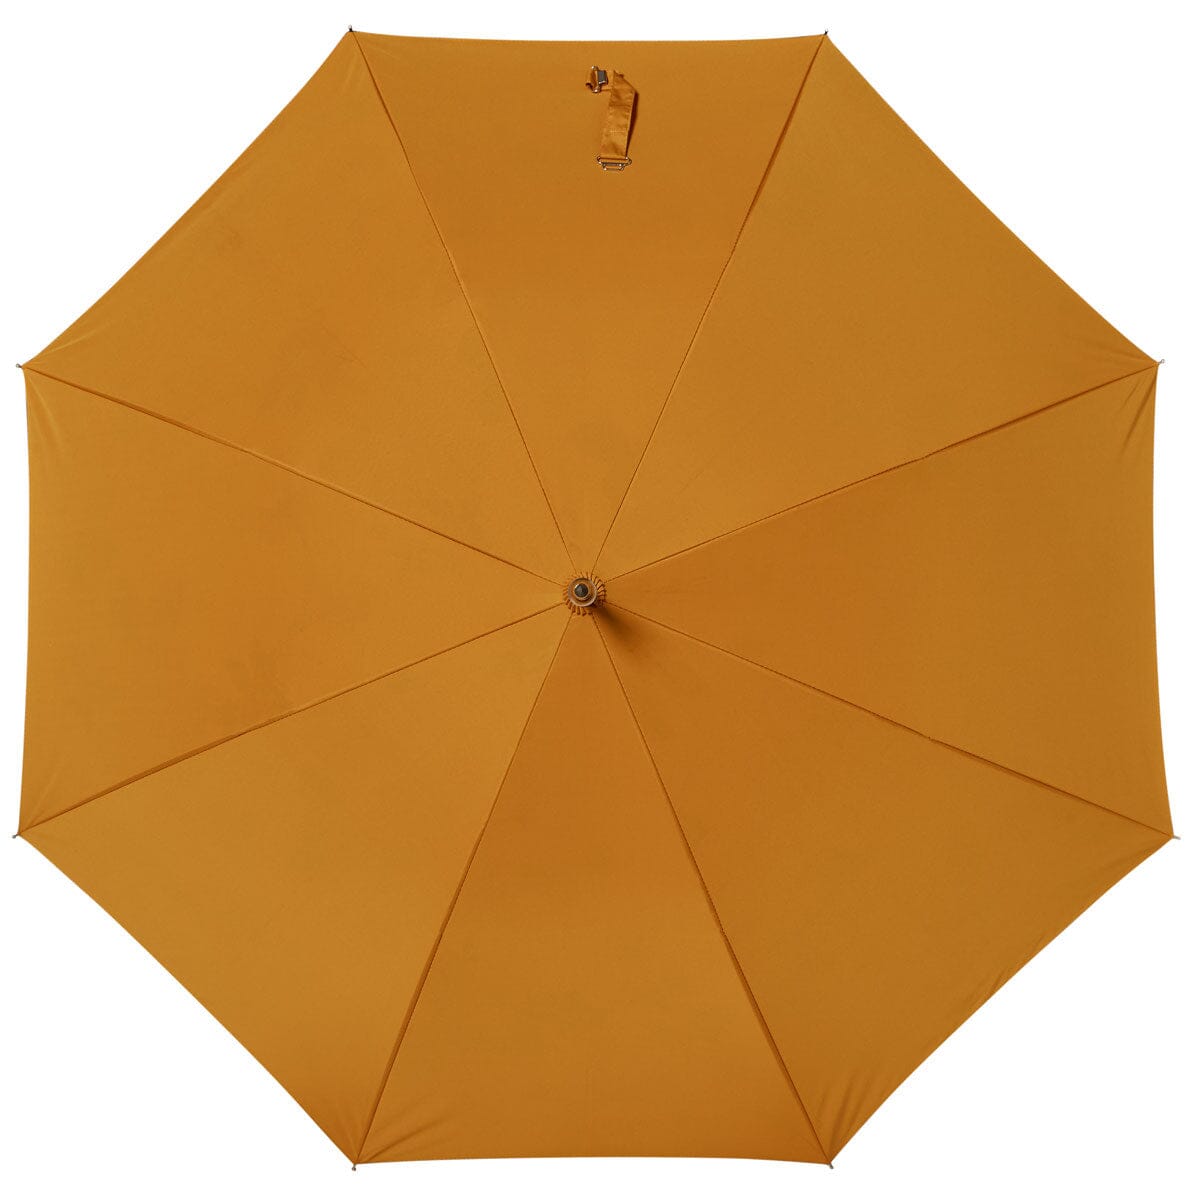 The Rain Umbrella - Paisley Bay Rain Umbrella Business & Pleasure Co 